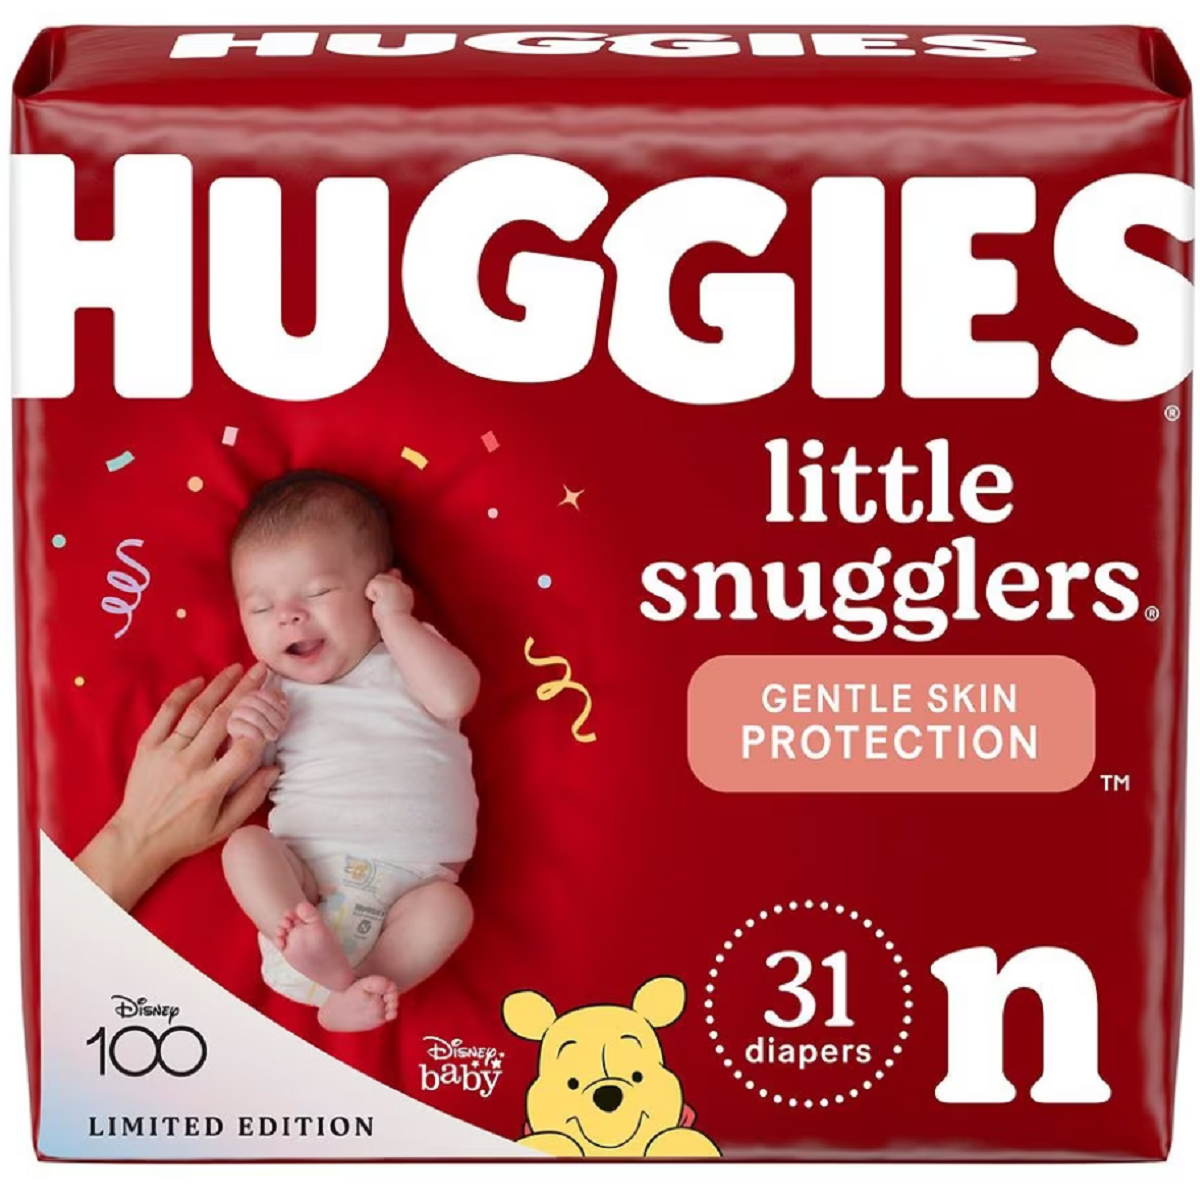 $1.50 Off (1) Huggies Diapers Printable Coupon